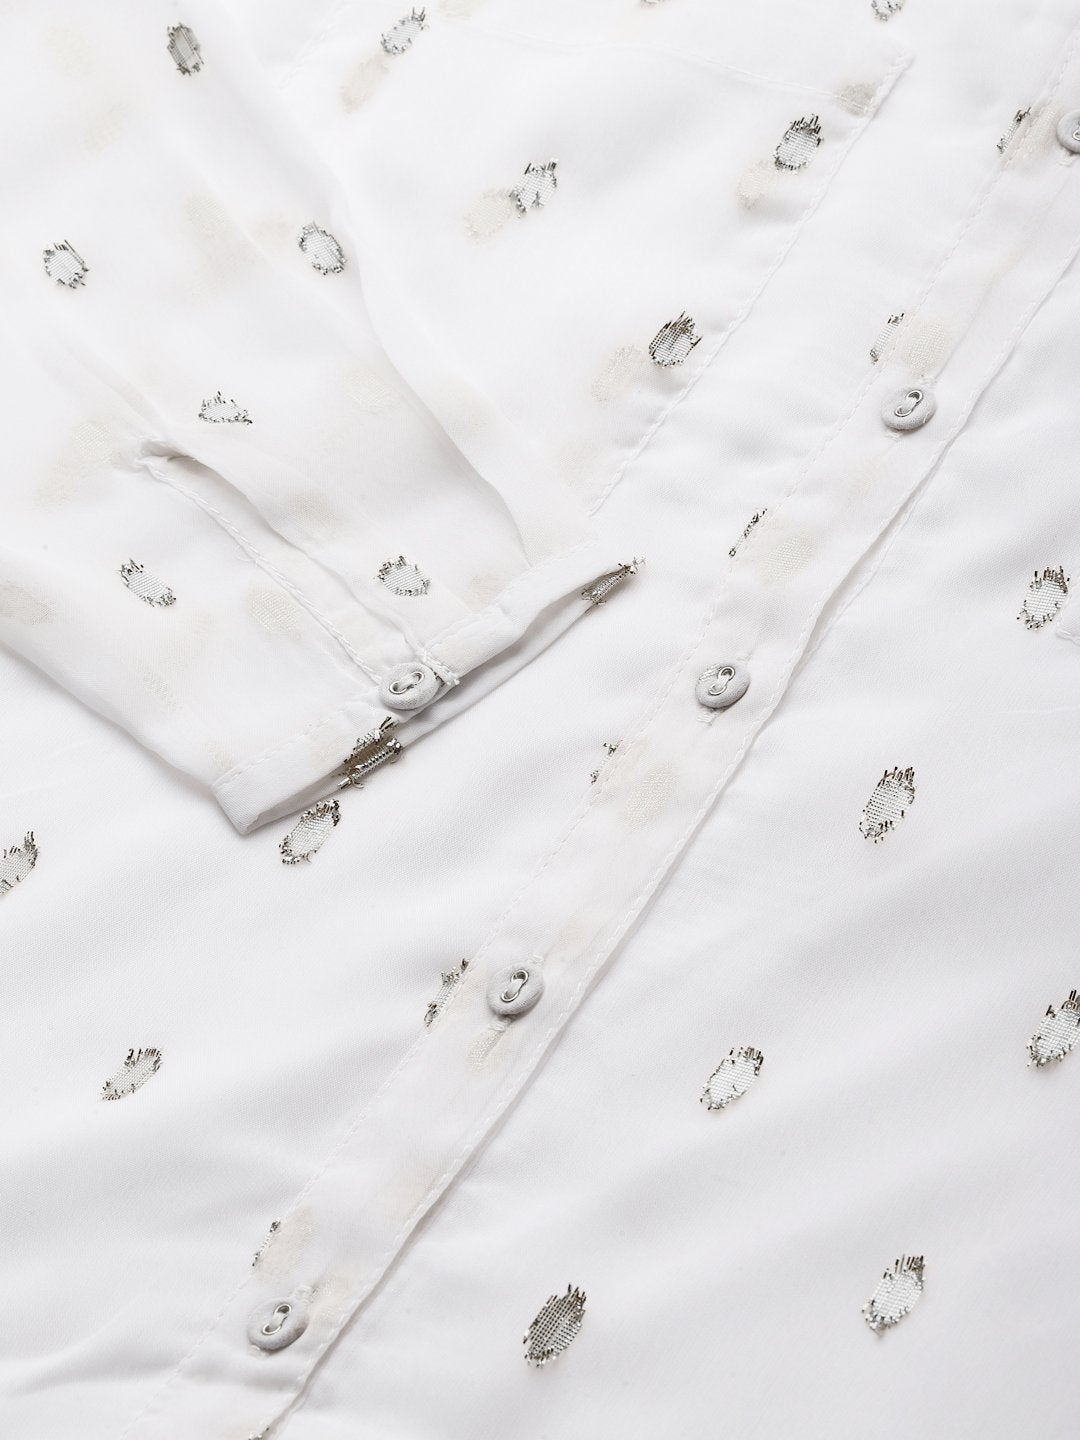 Women's White Lurex Sheer Shirt - SASSAFRAS